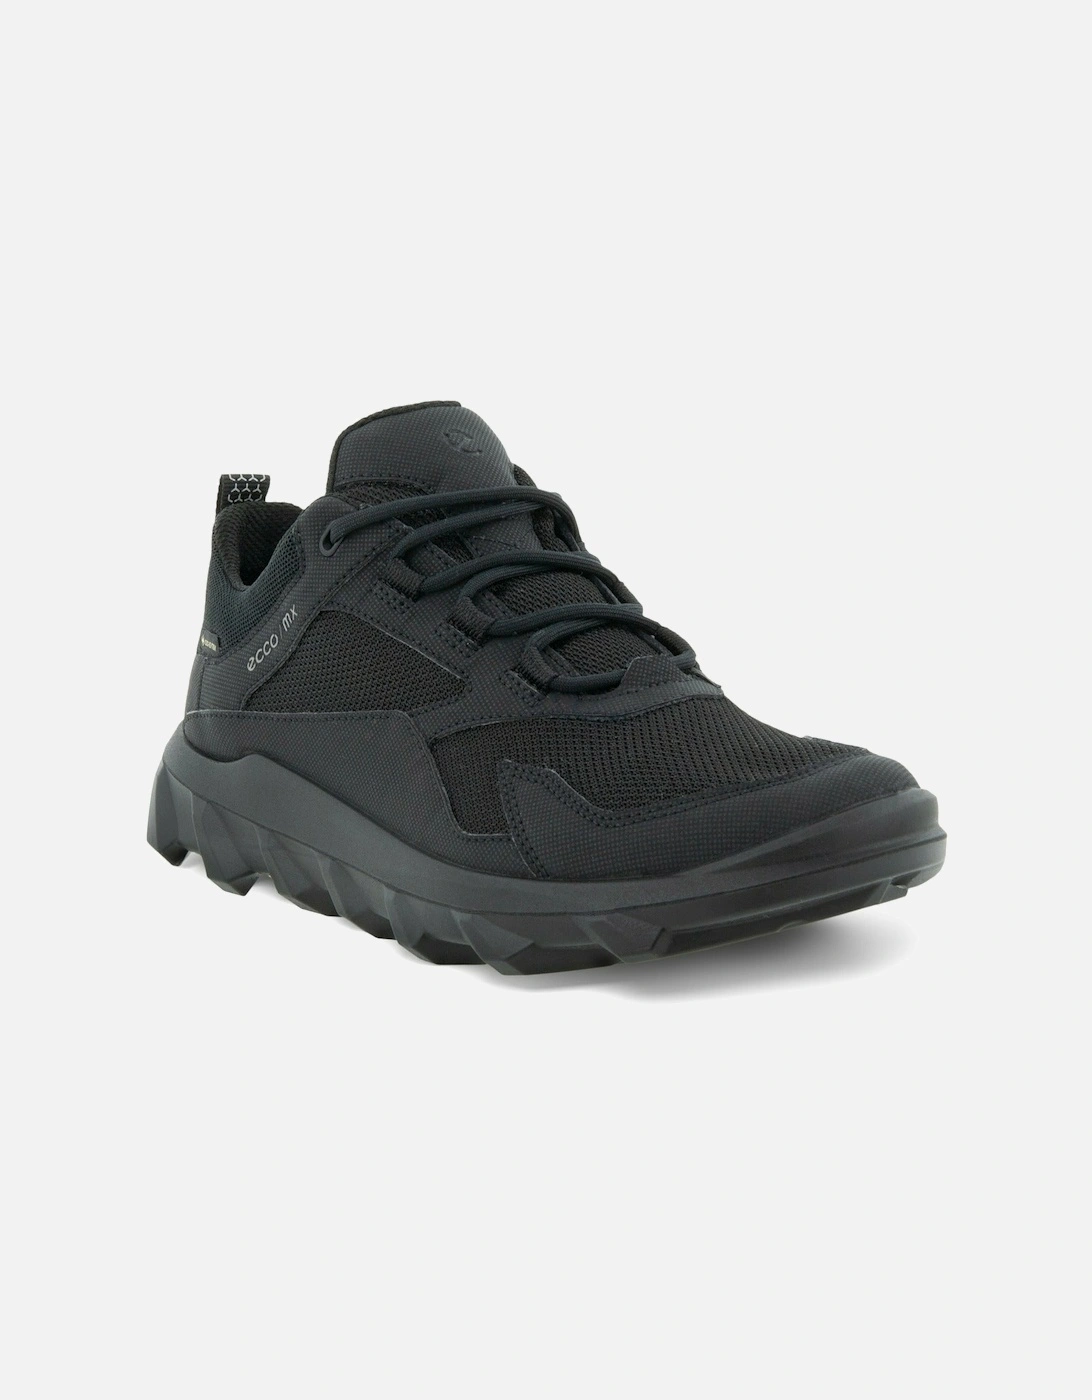 Mx Waterproof walking shoes 820193-51052 in black, 2 of 1